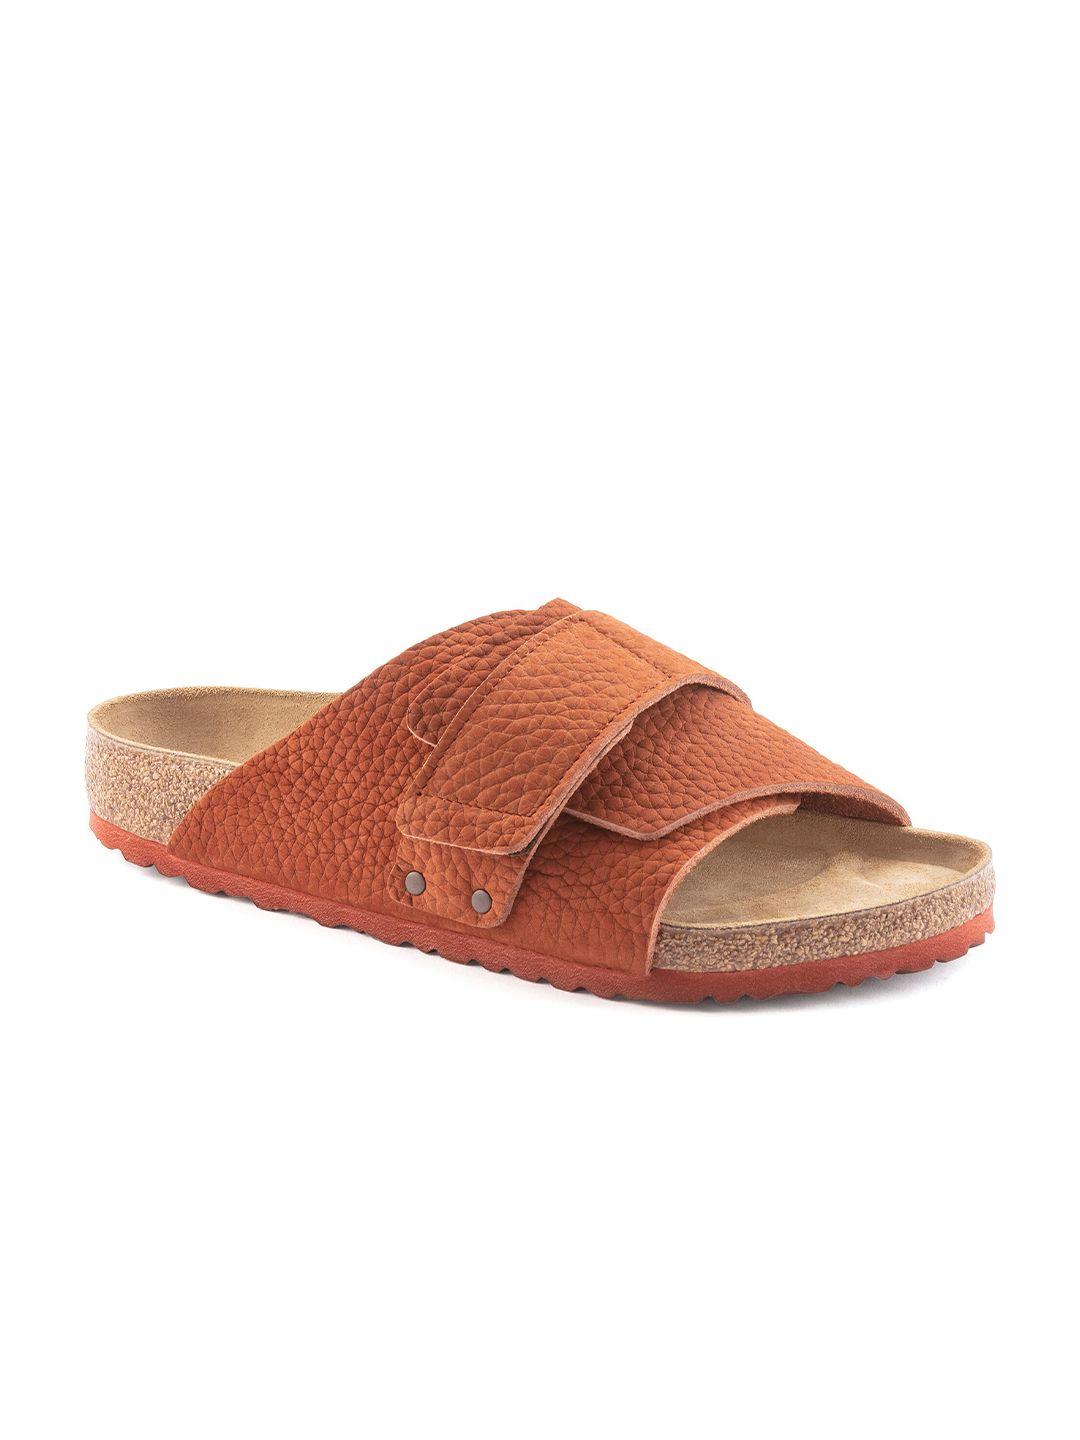 birkenstock men kyoto shearling regular width one-strap comfort sandals